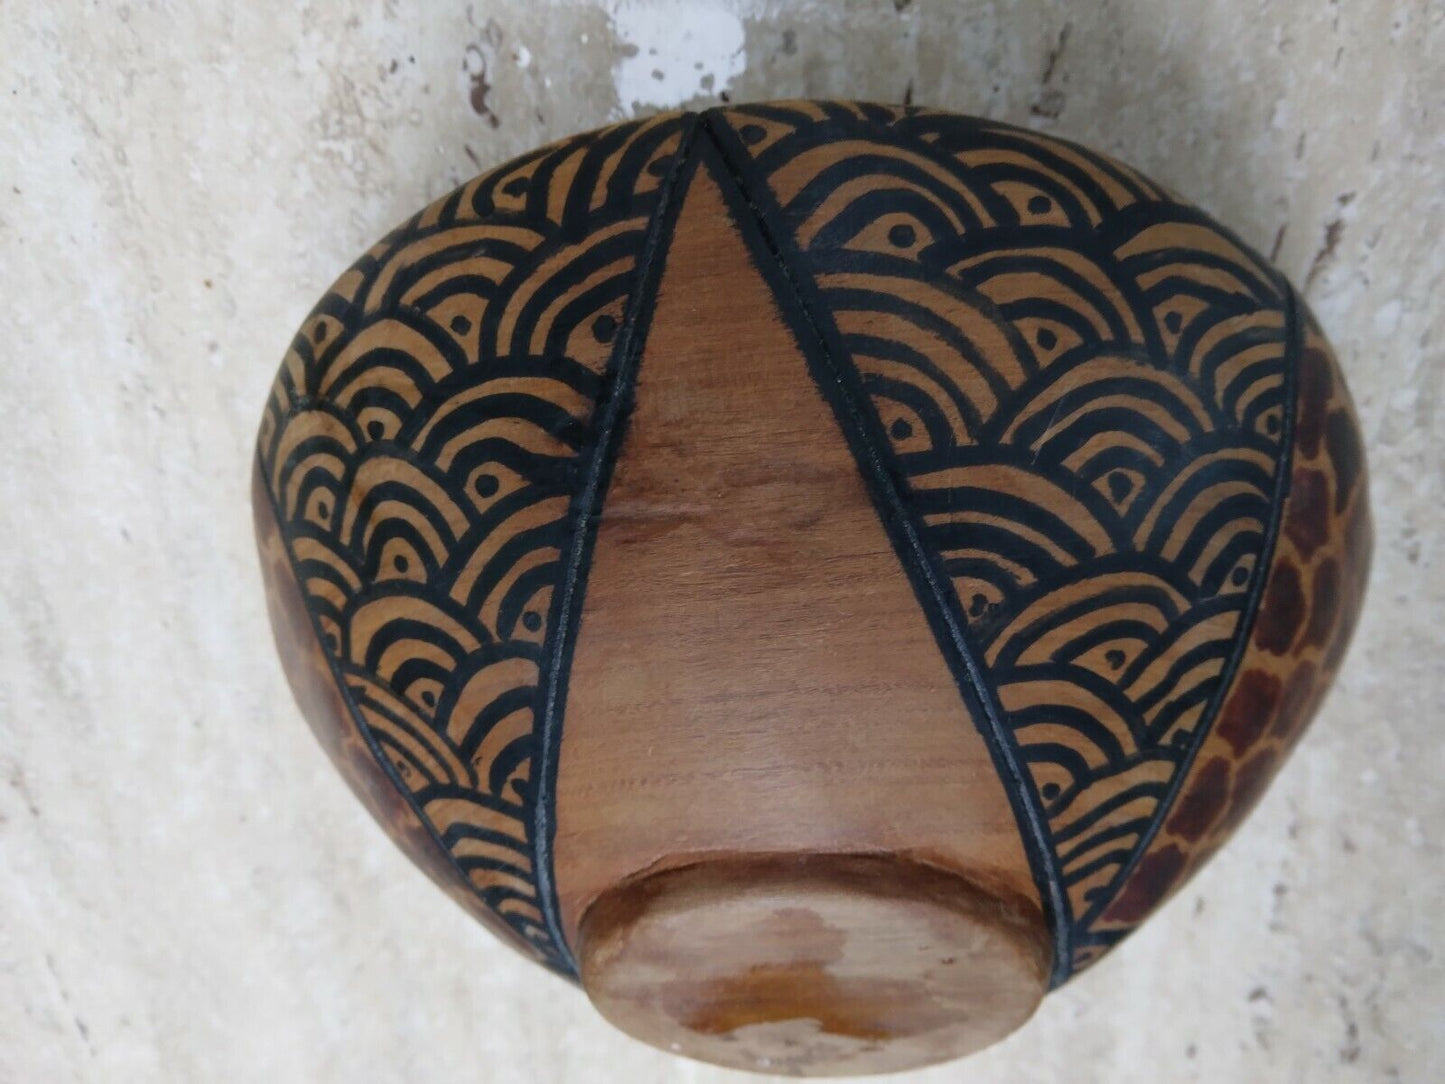 Wooden Bowl Giraffe African Design Hand Carved Painted Folk Art Home Decor